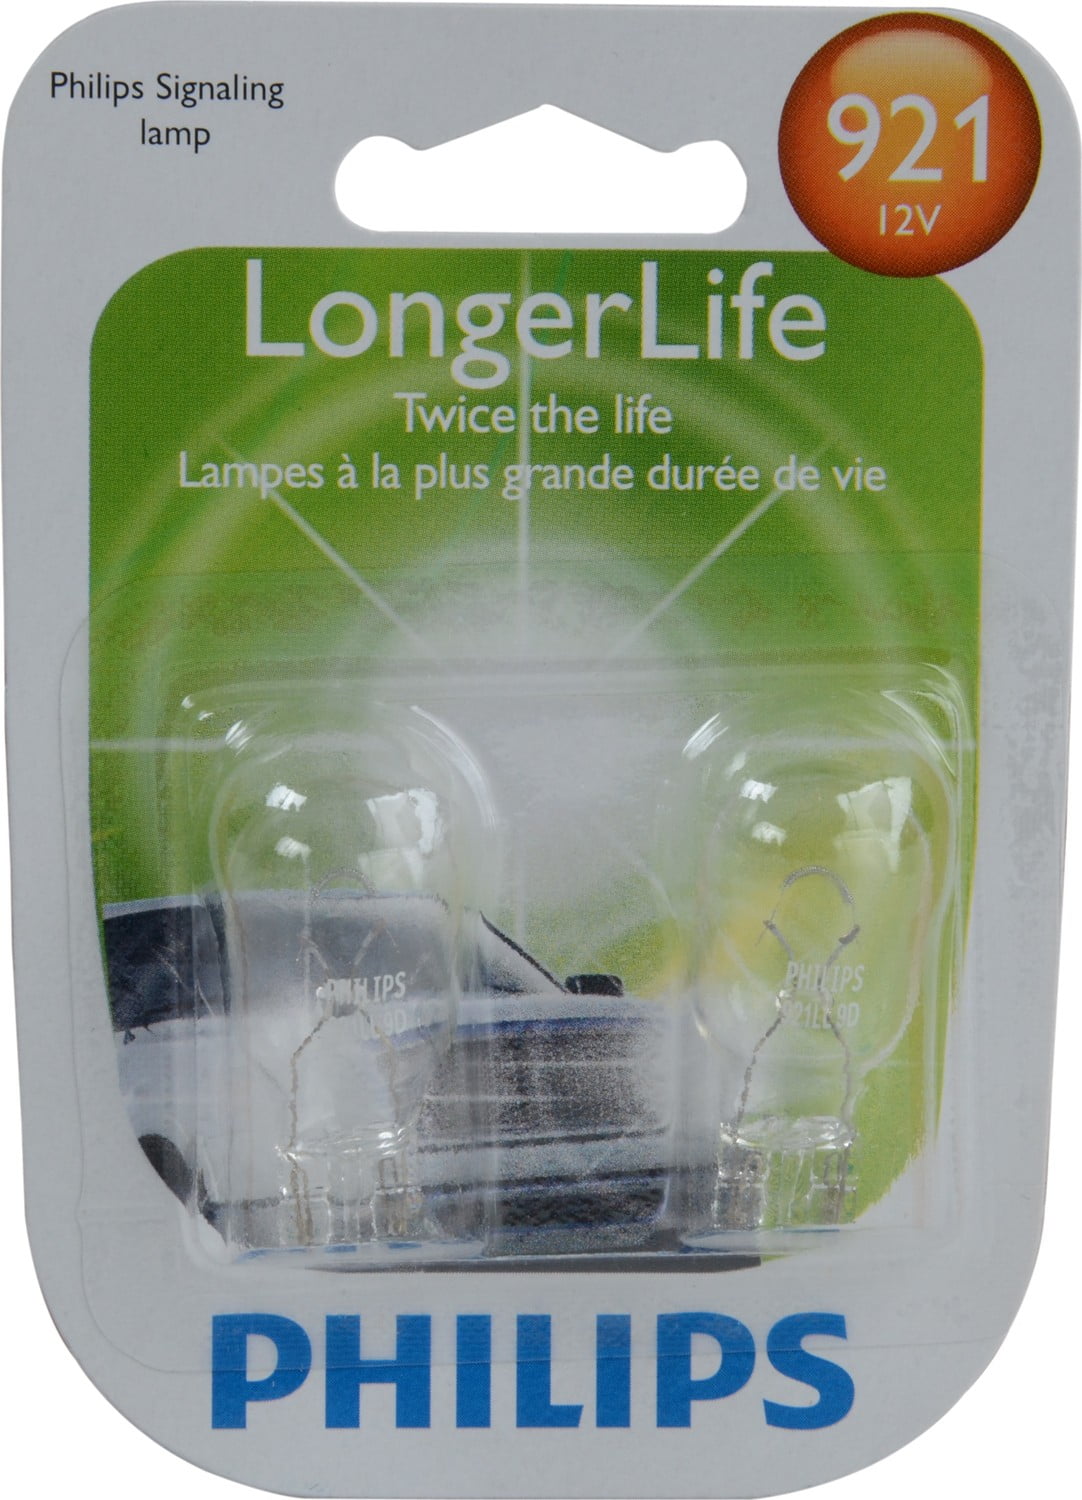  Longerlife Miniature 921Ll, Clear, Push Type, Always Change In .